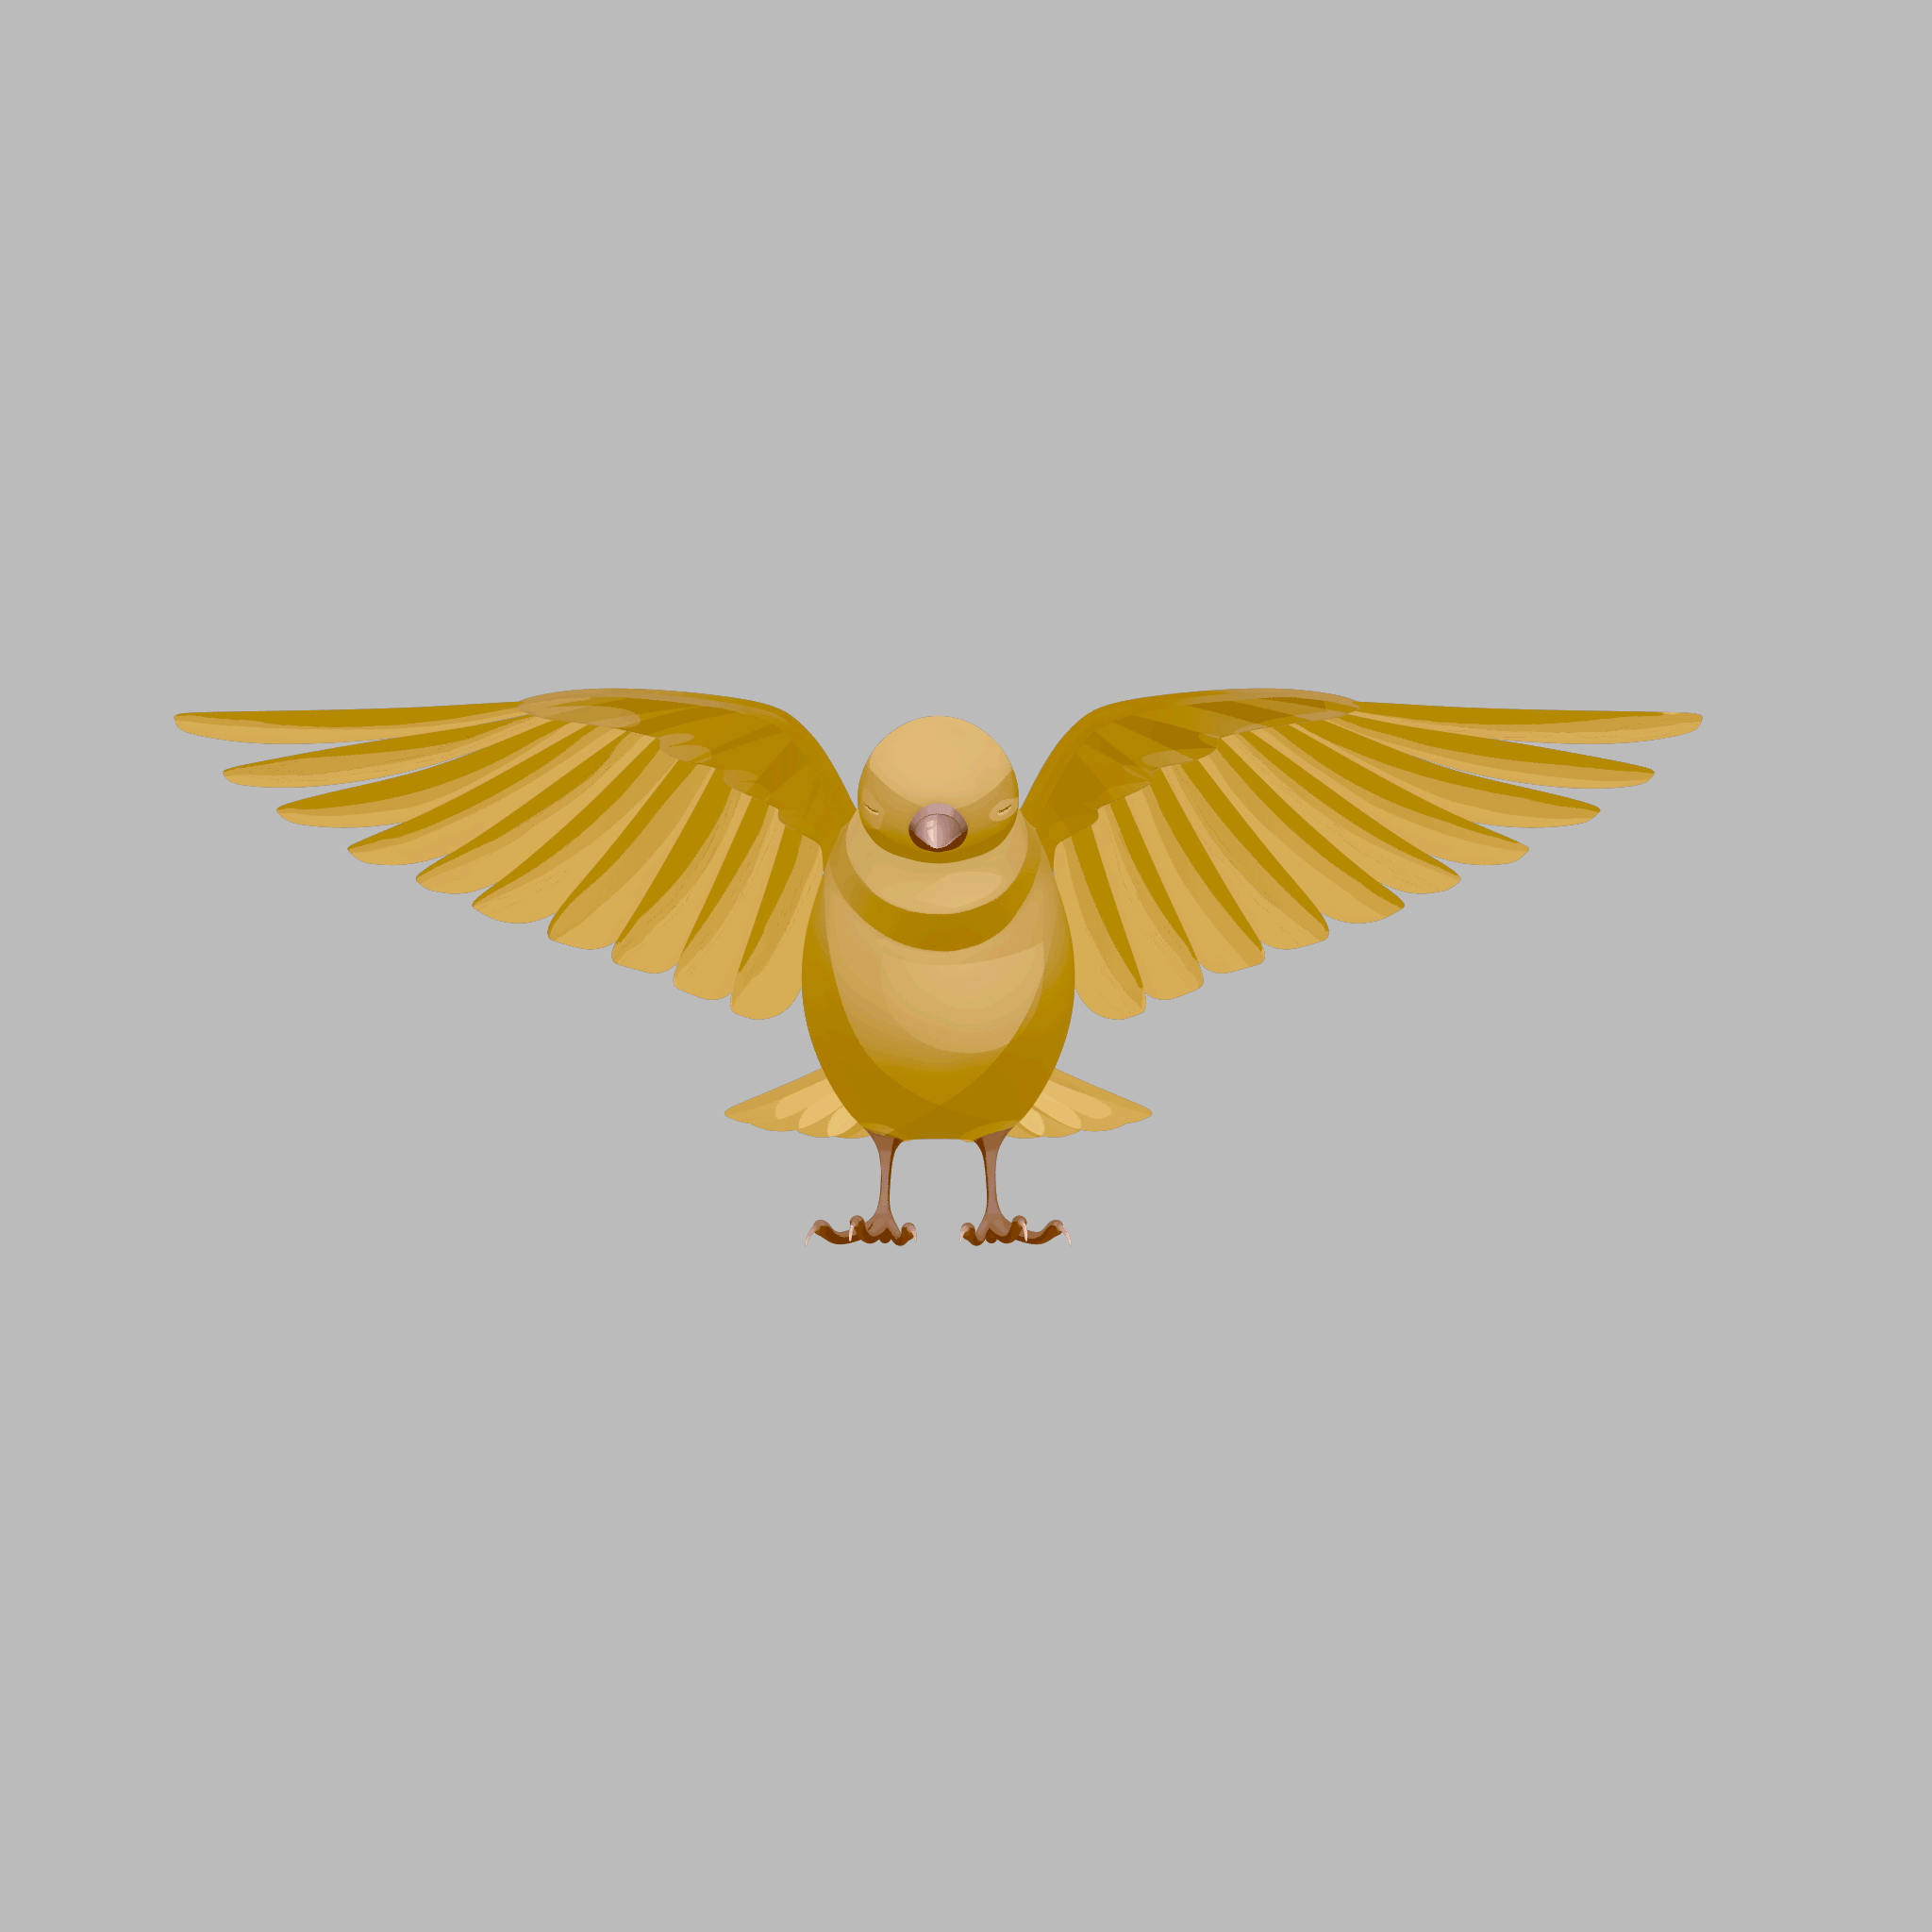 Yellowbird textured model turntable